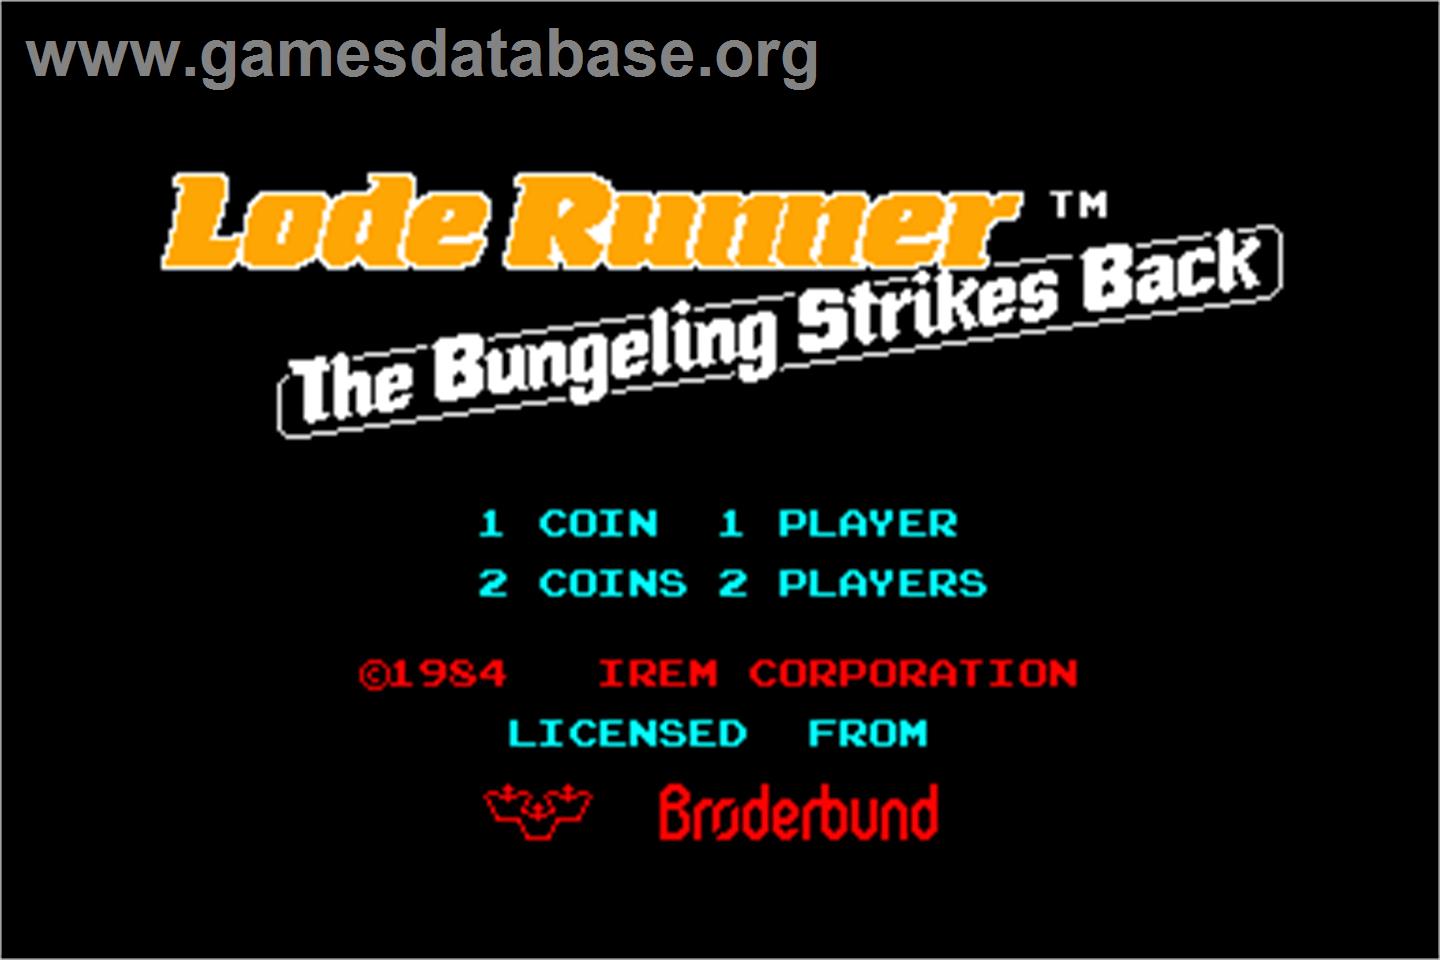 Lode Runner II - The Bungeling Strikes Back - Arcade - Artwork - Title Screen